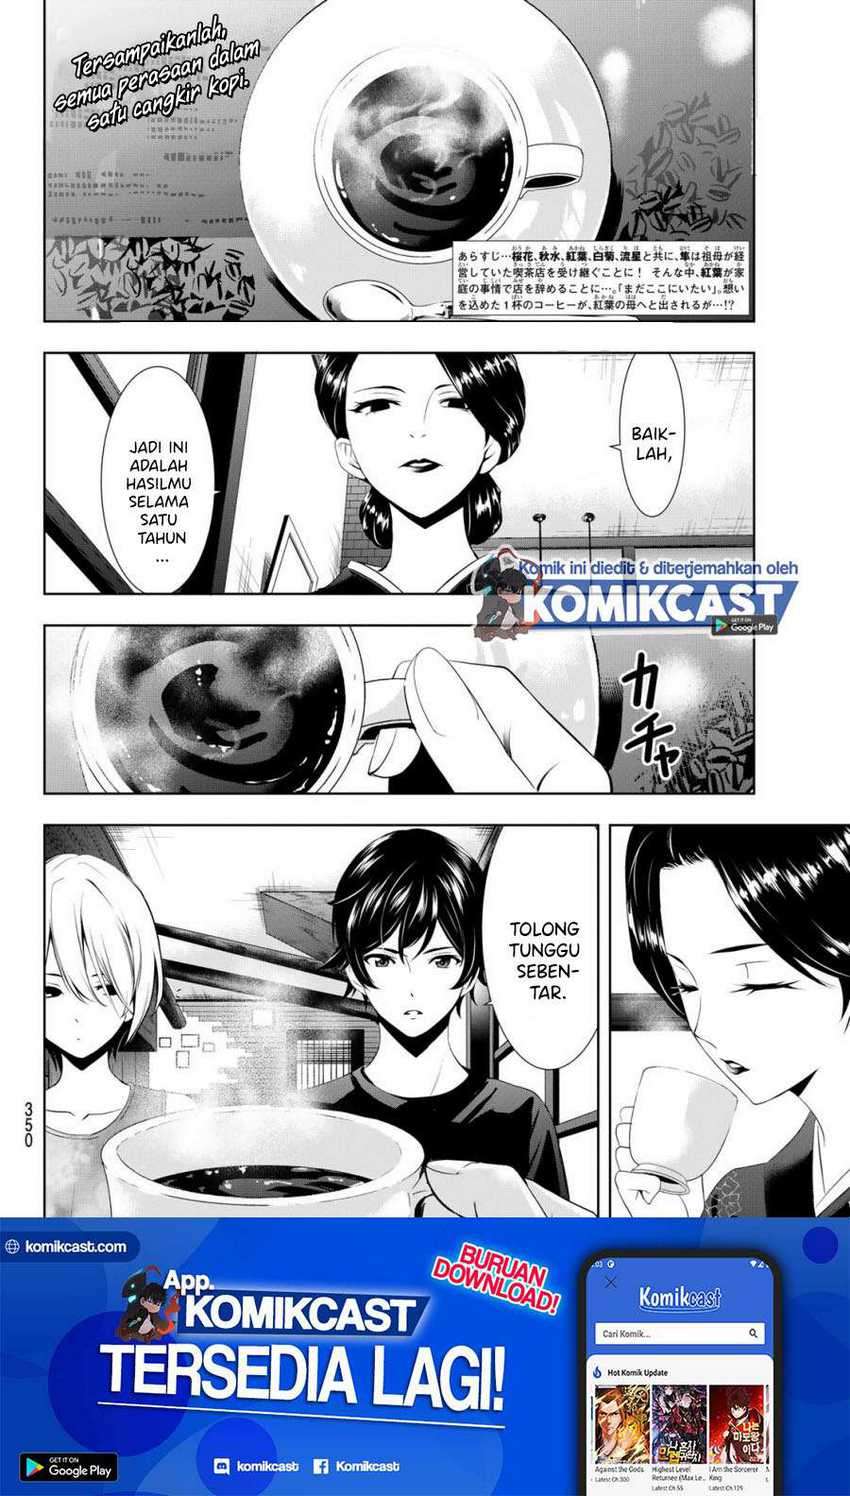 Megami no Kafeterasu (Goddess Café Terrace) Chapter 20